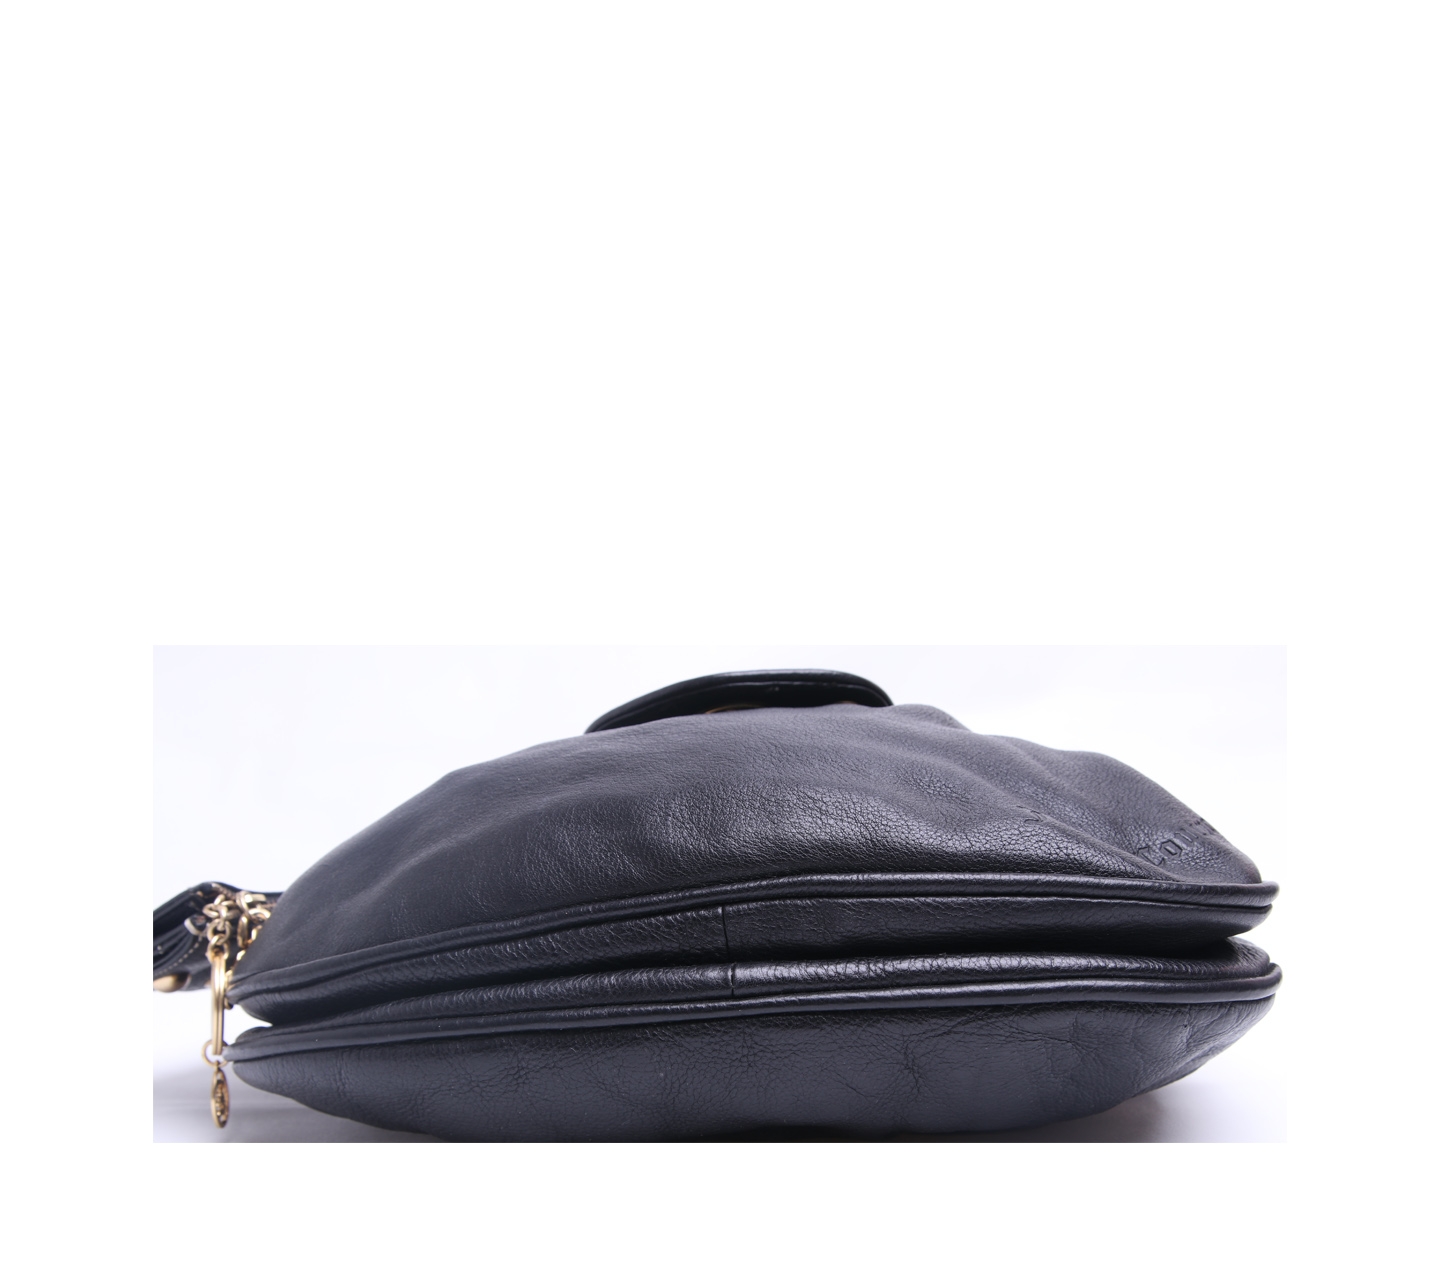 Juicy Couture Black Shoulder Bag